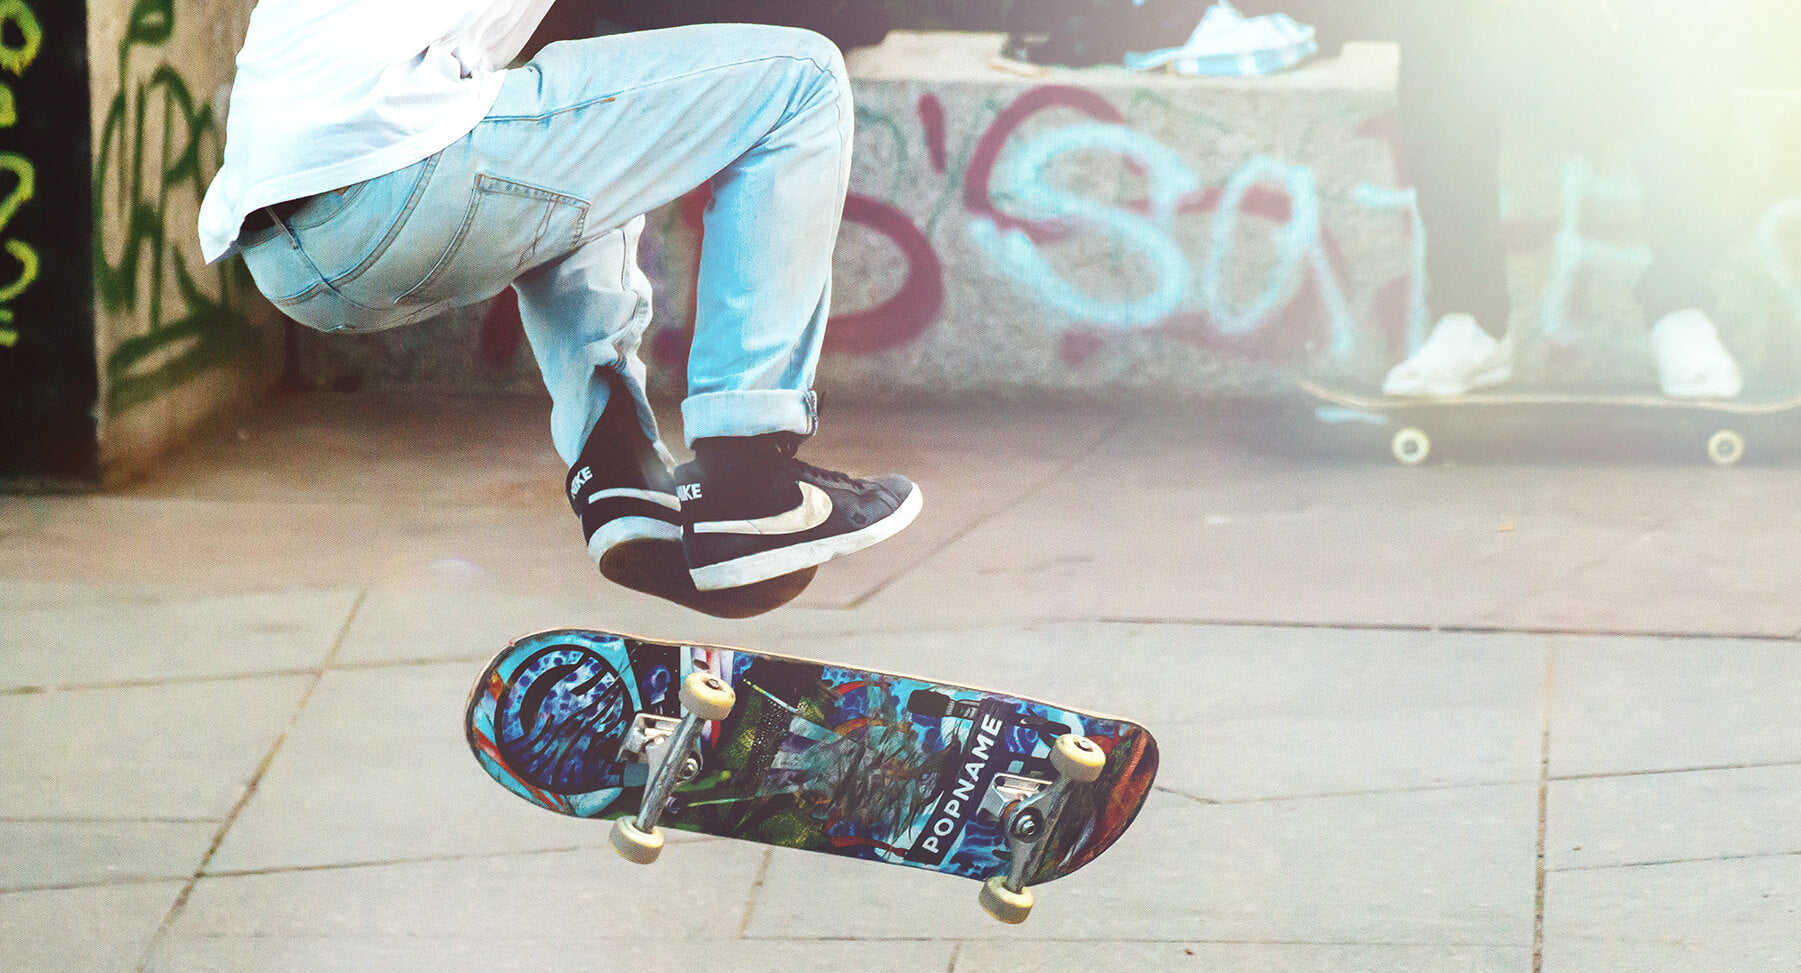 Can a Skateboard Be a Work of Art? - WSJ